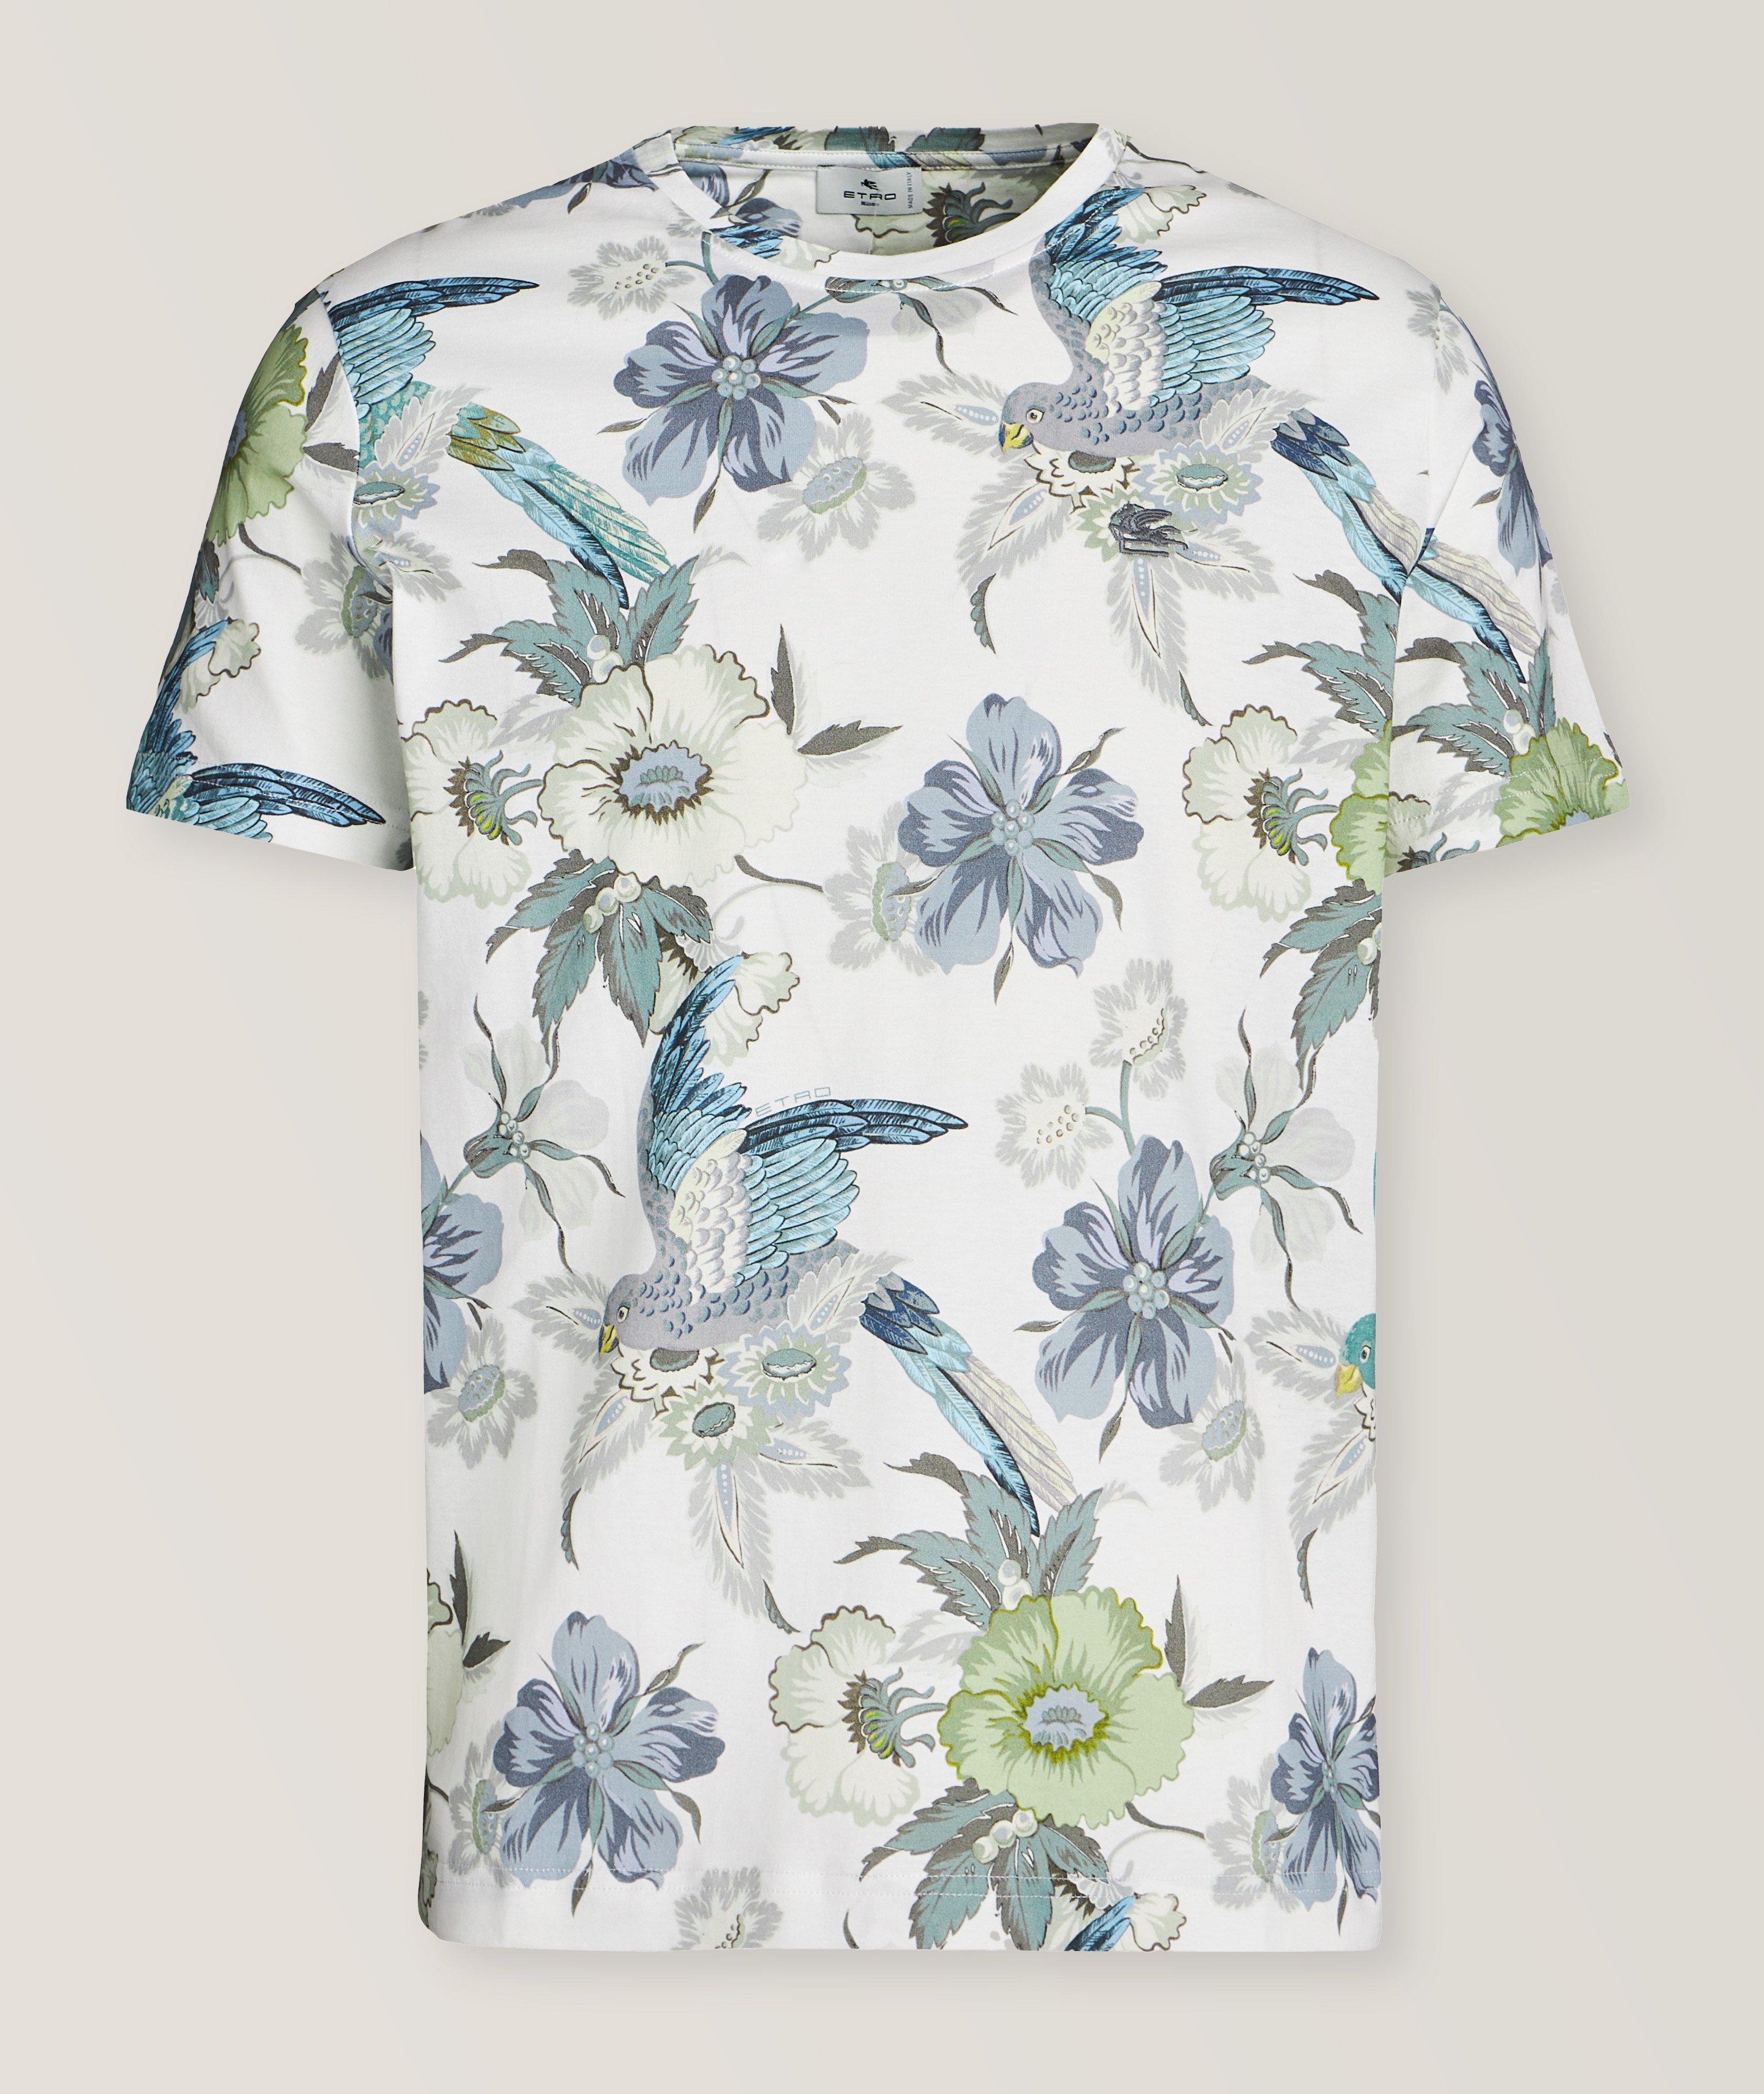 Bird and Flower Cotton T-Shirt image 0